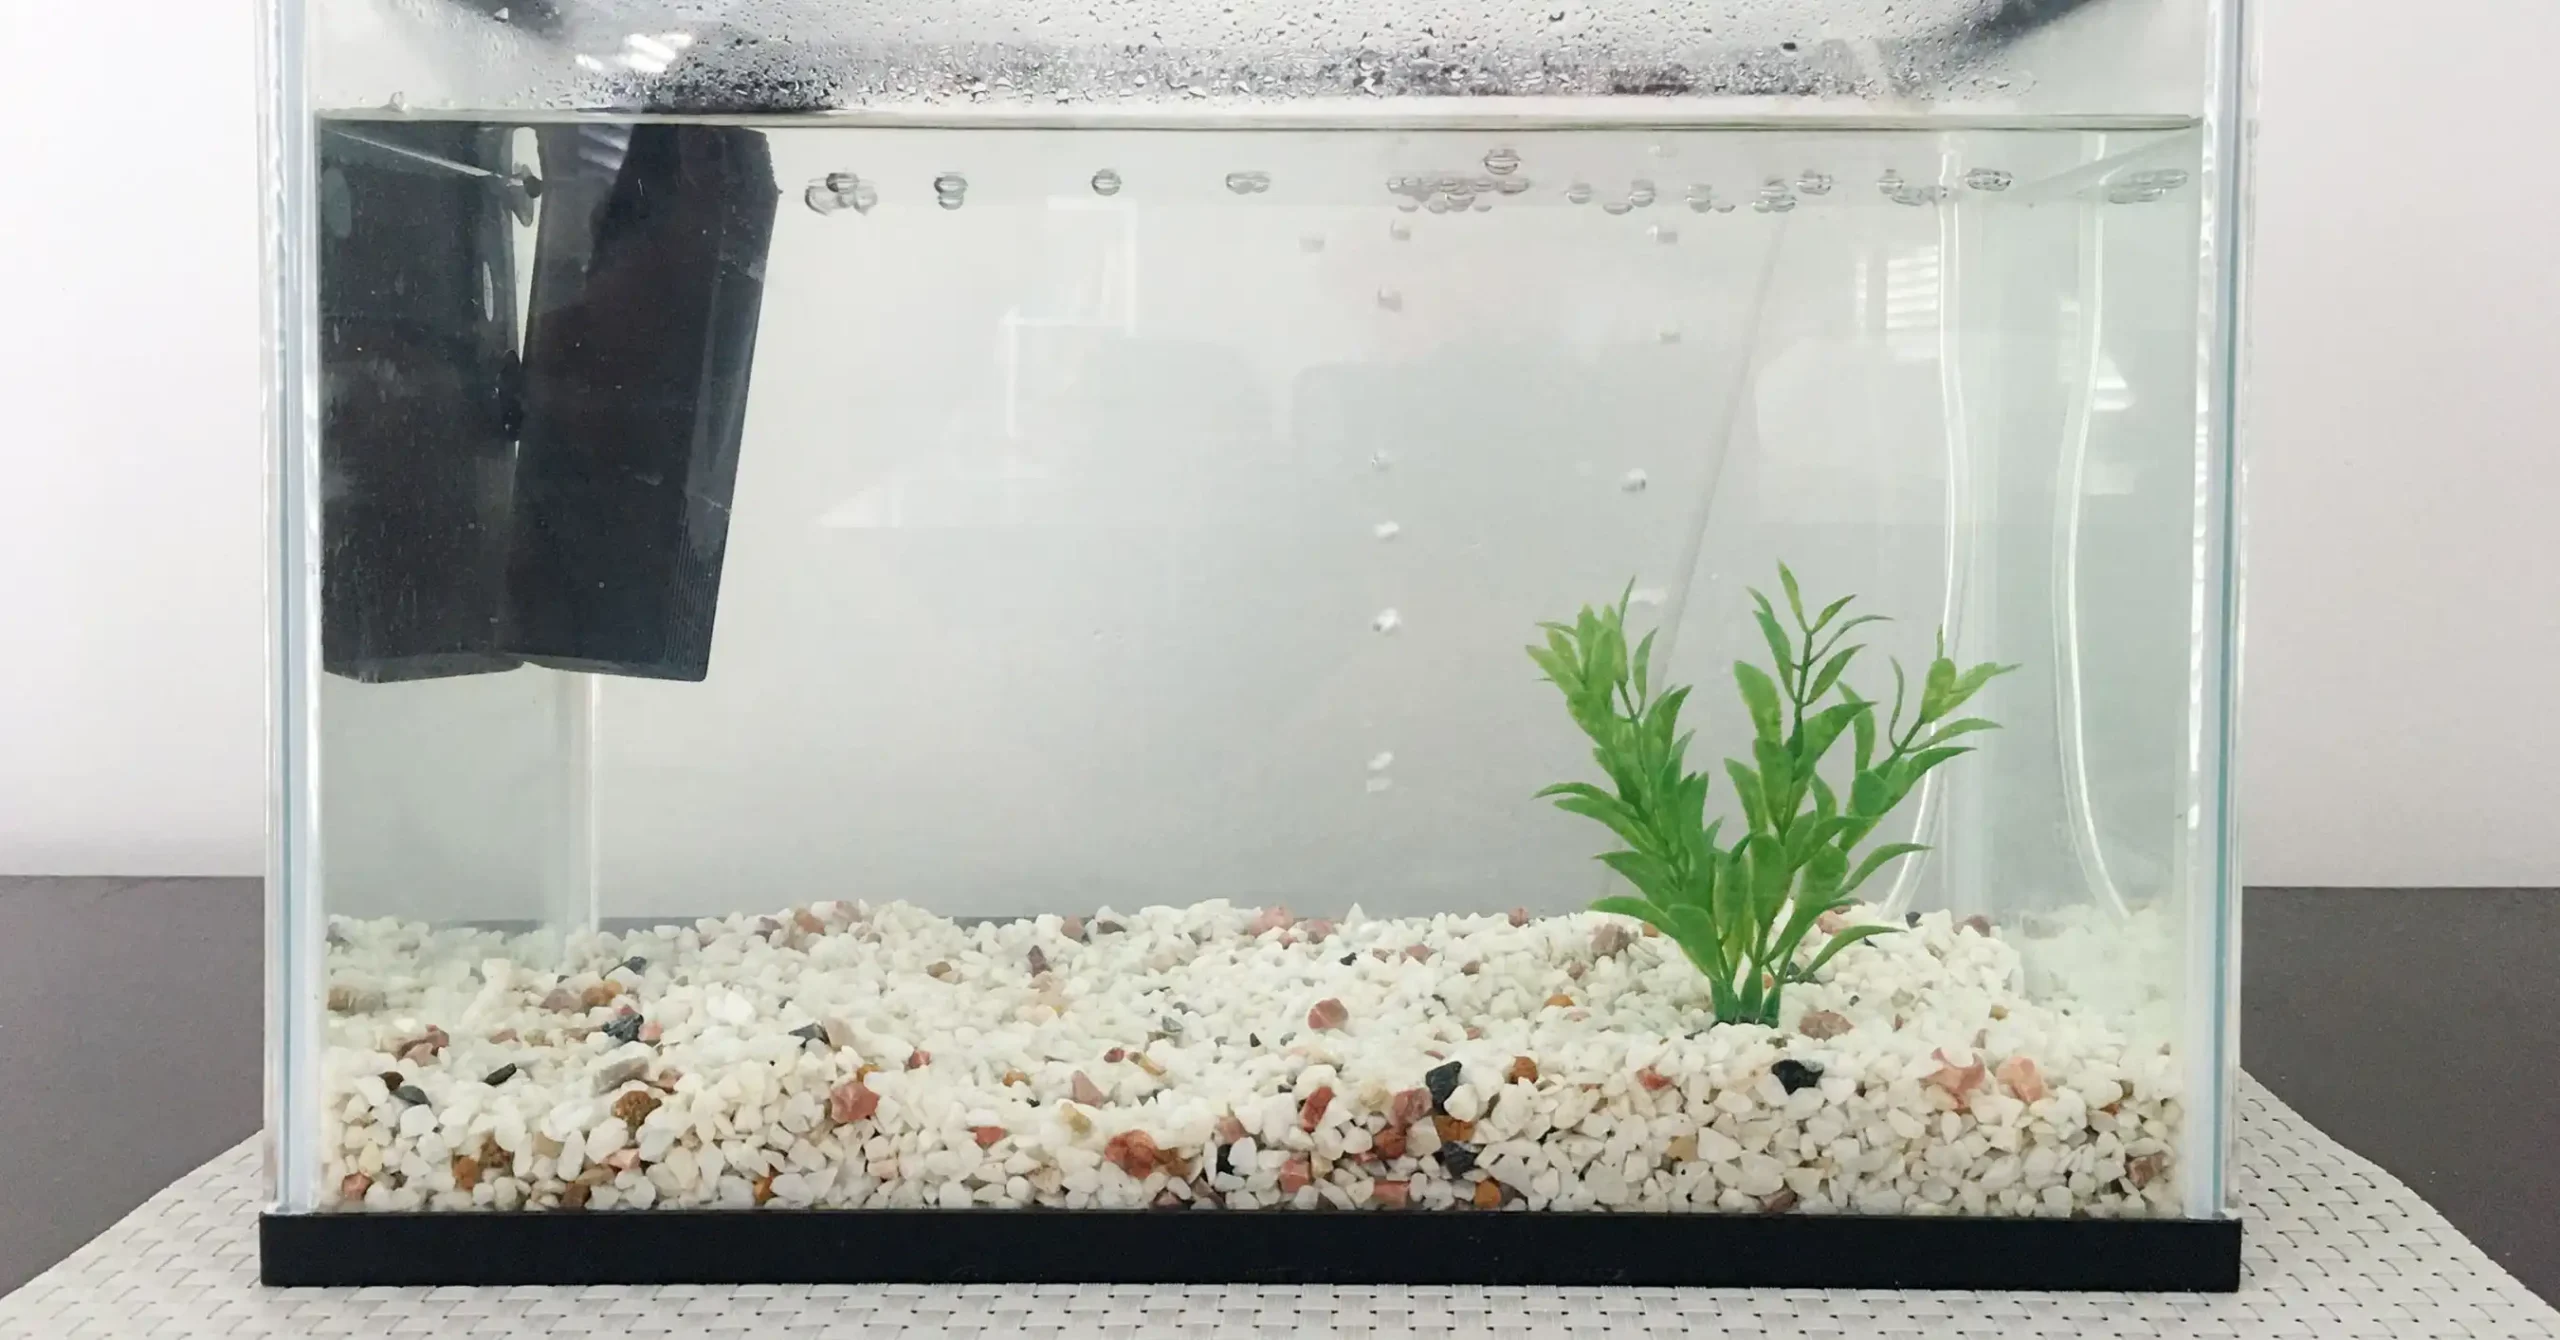 Quarantine Tank for Fish